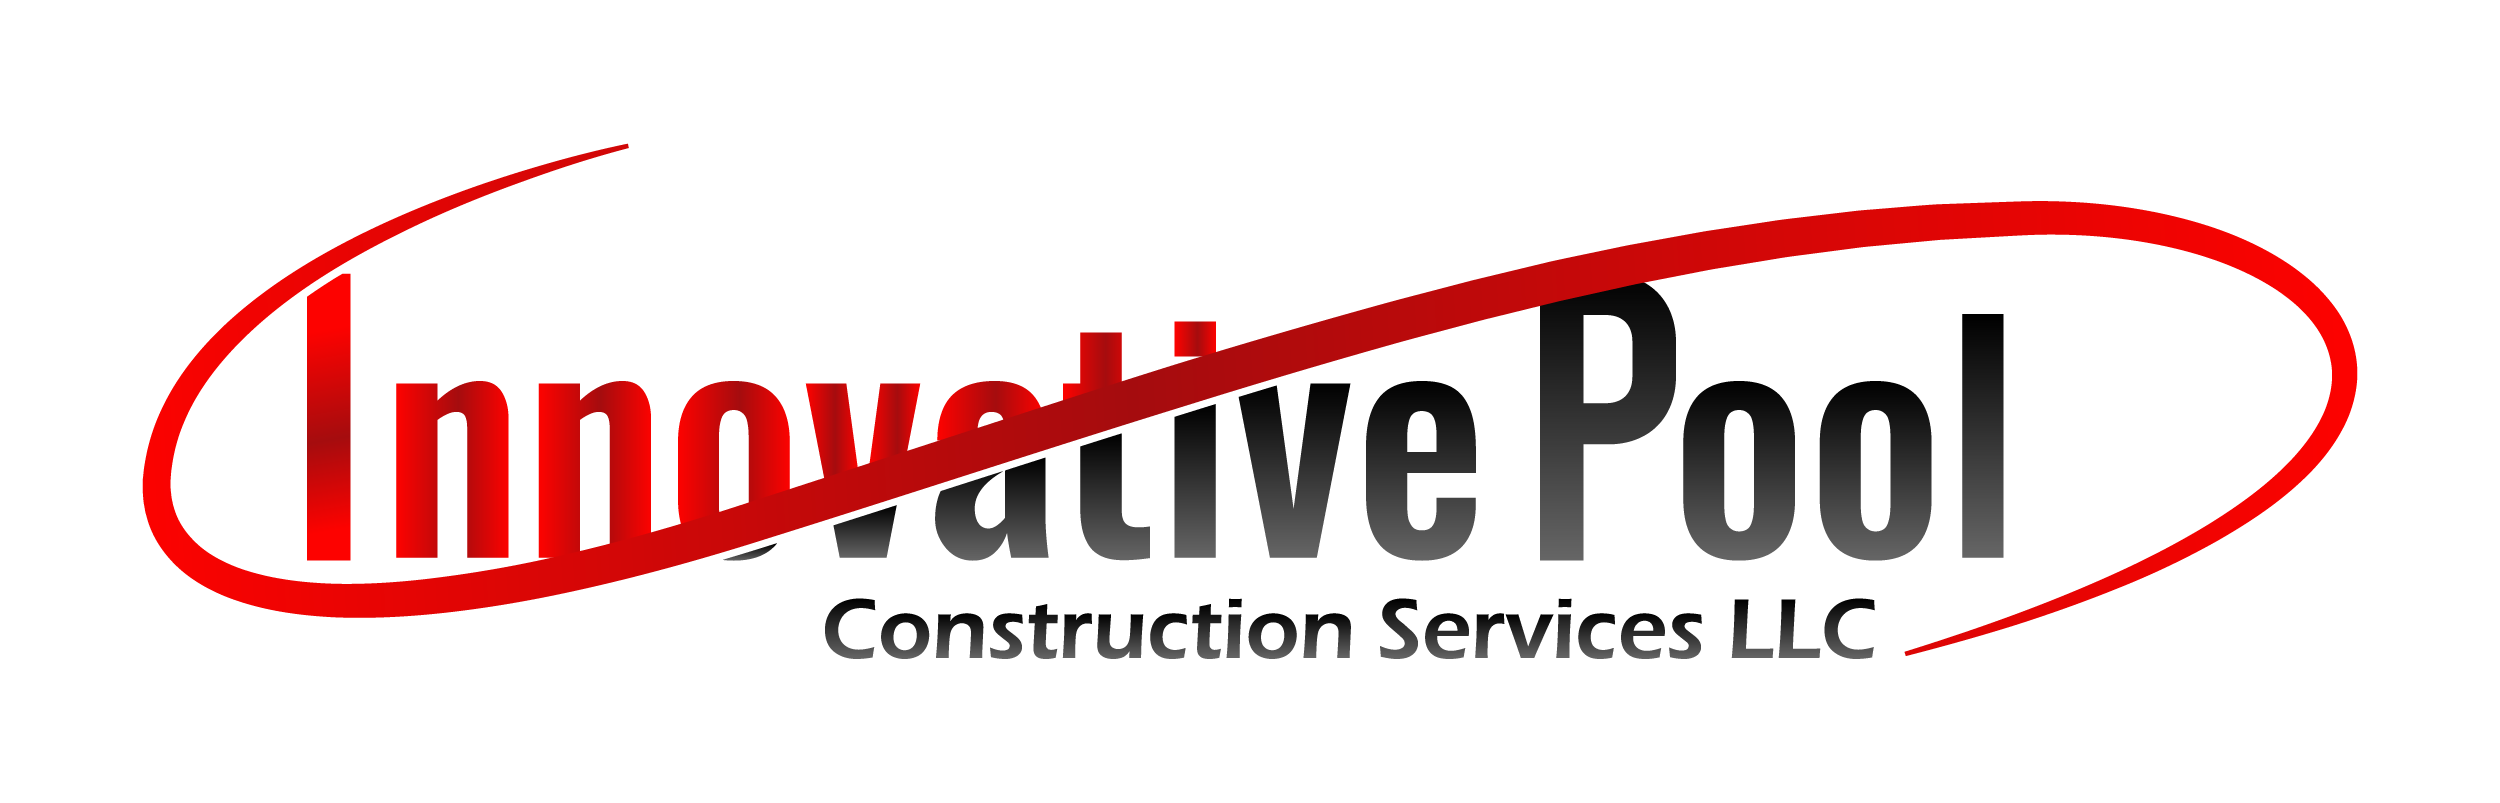 Innovative Pool Construction Services, LLC Logo